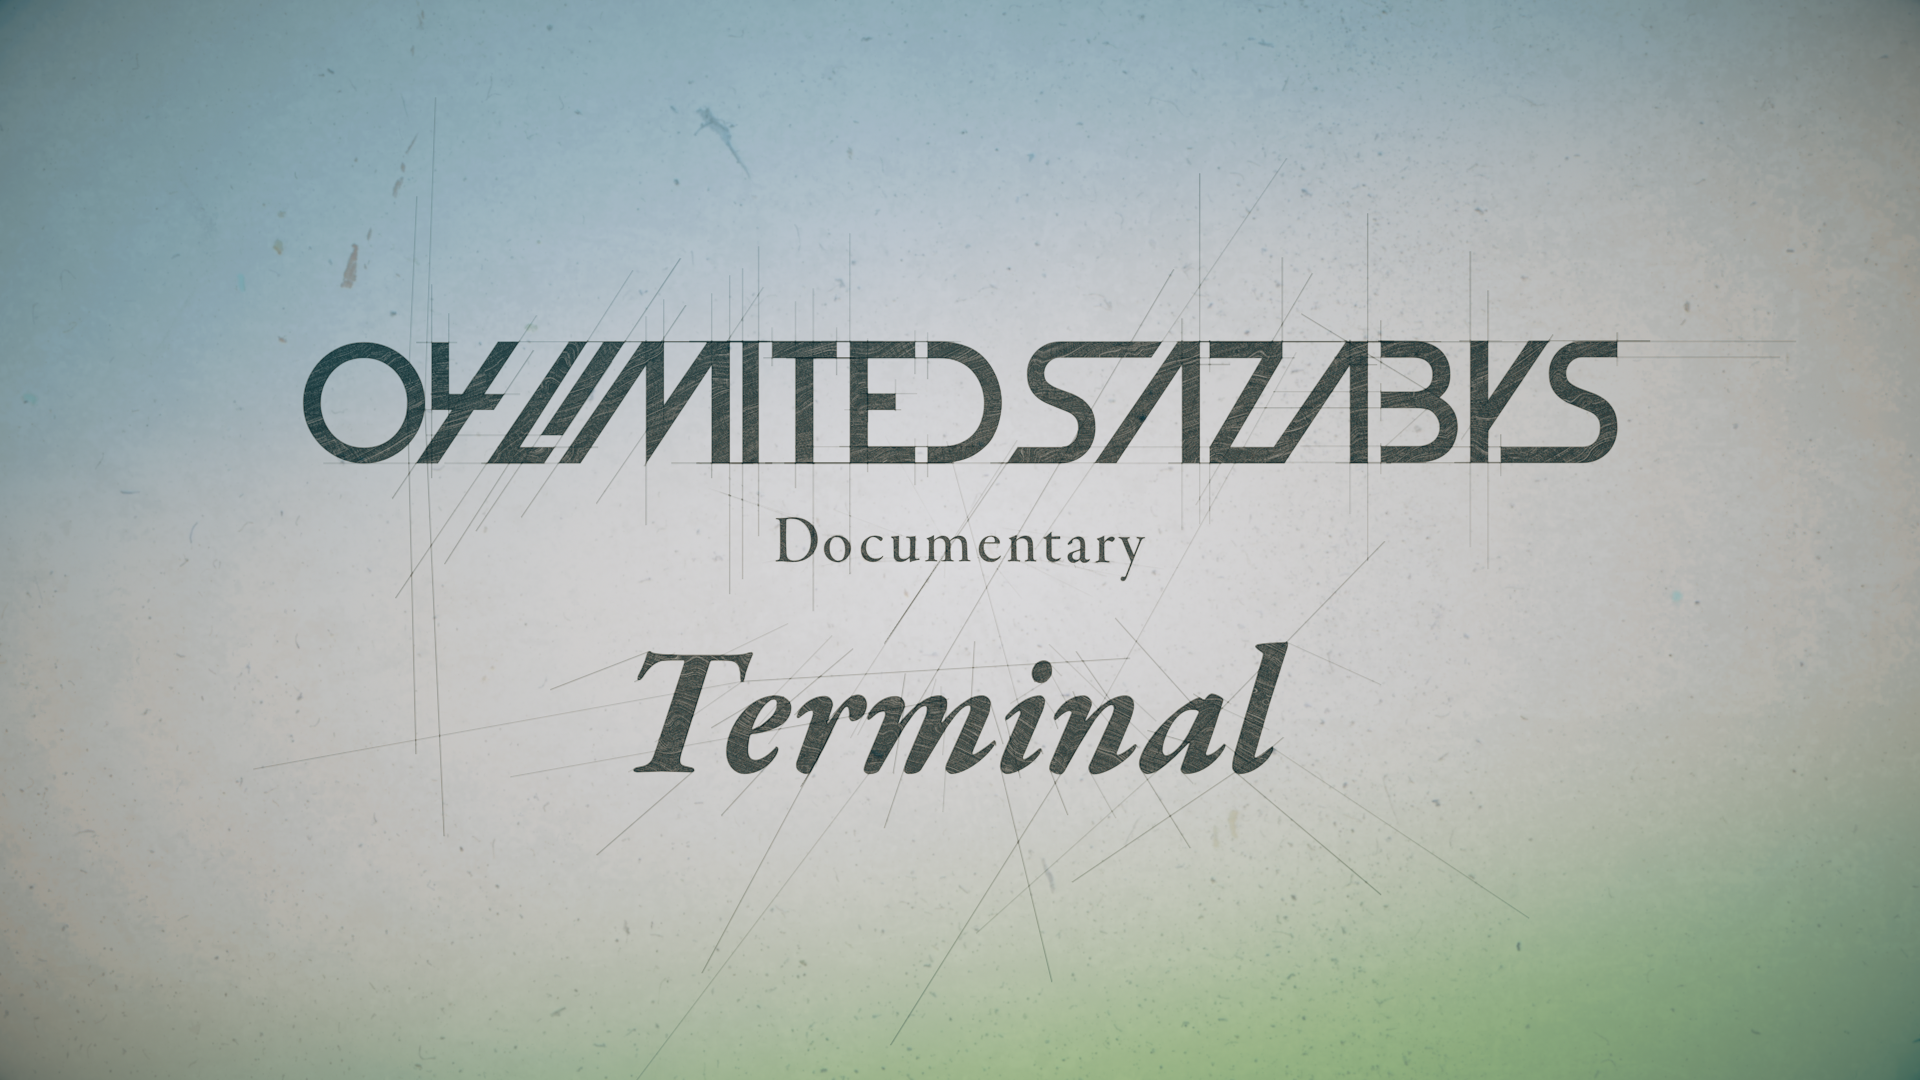 04 Limited Sazabys Documentary "Terminal" 配信中！